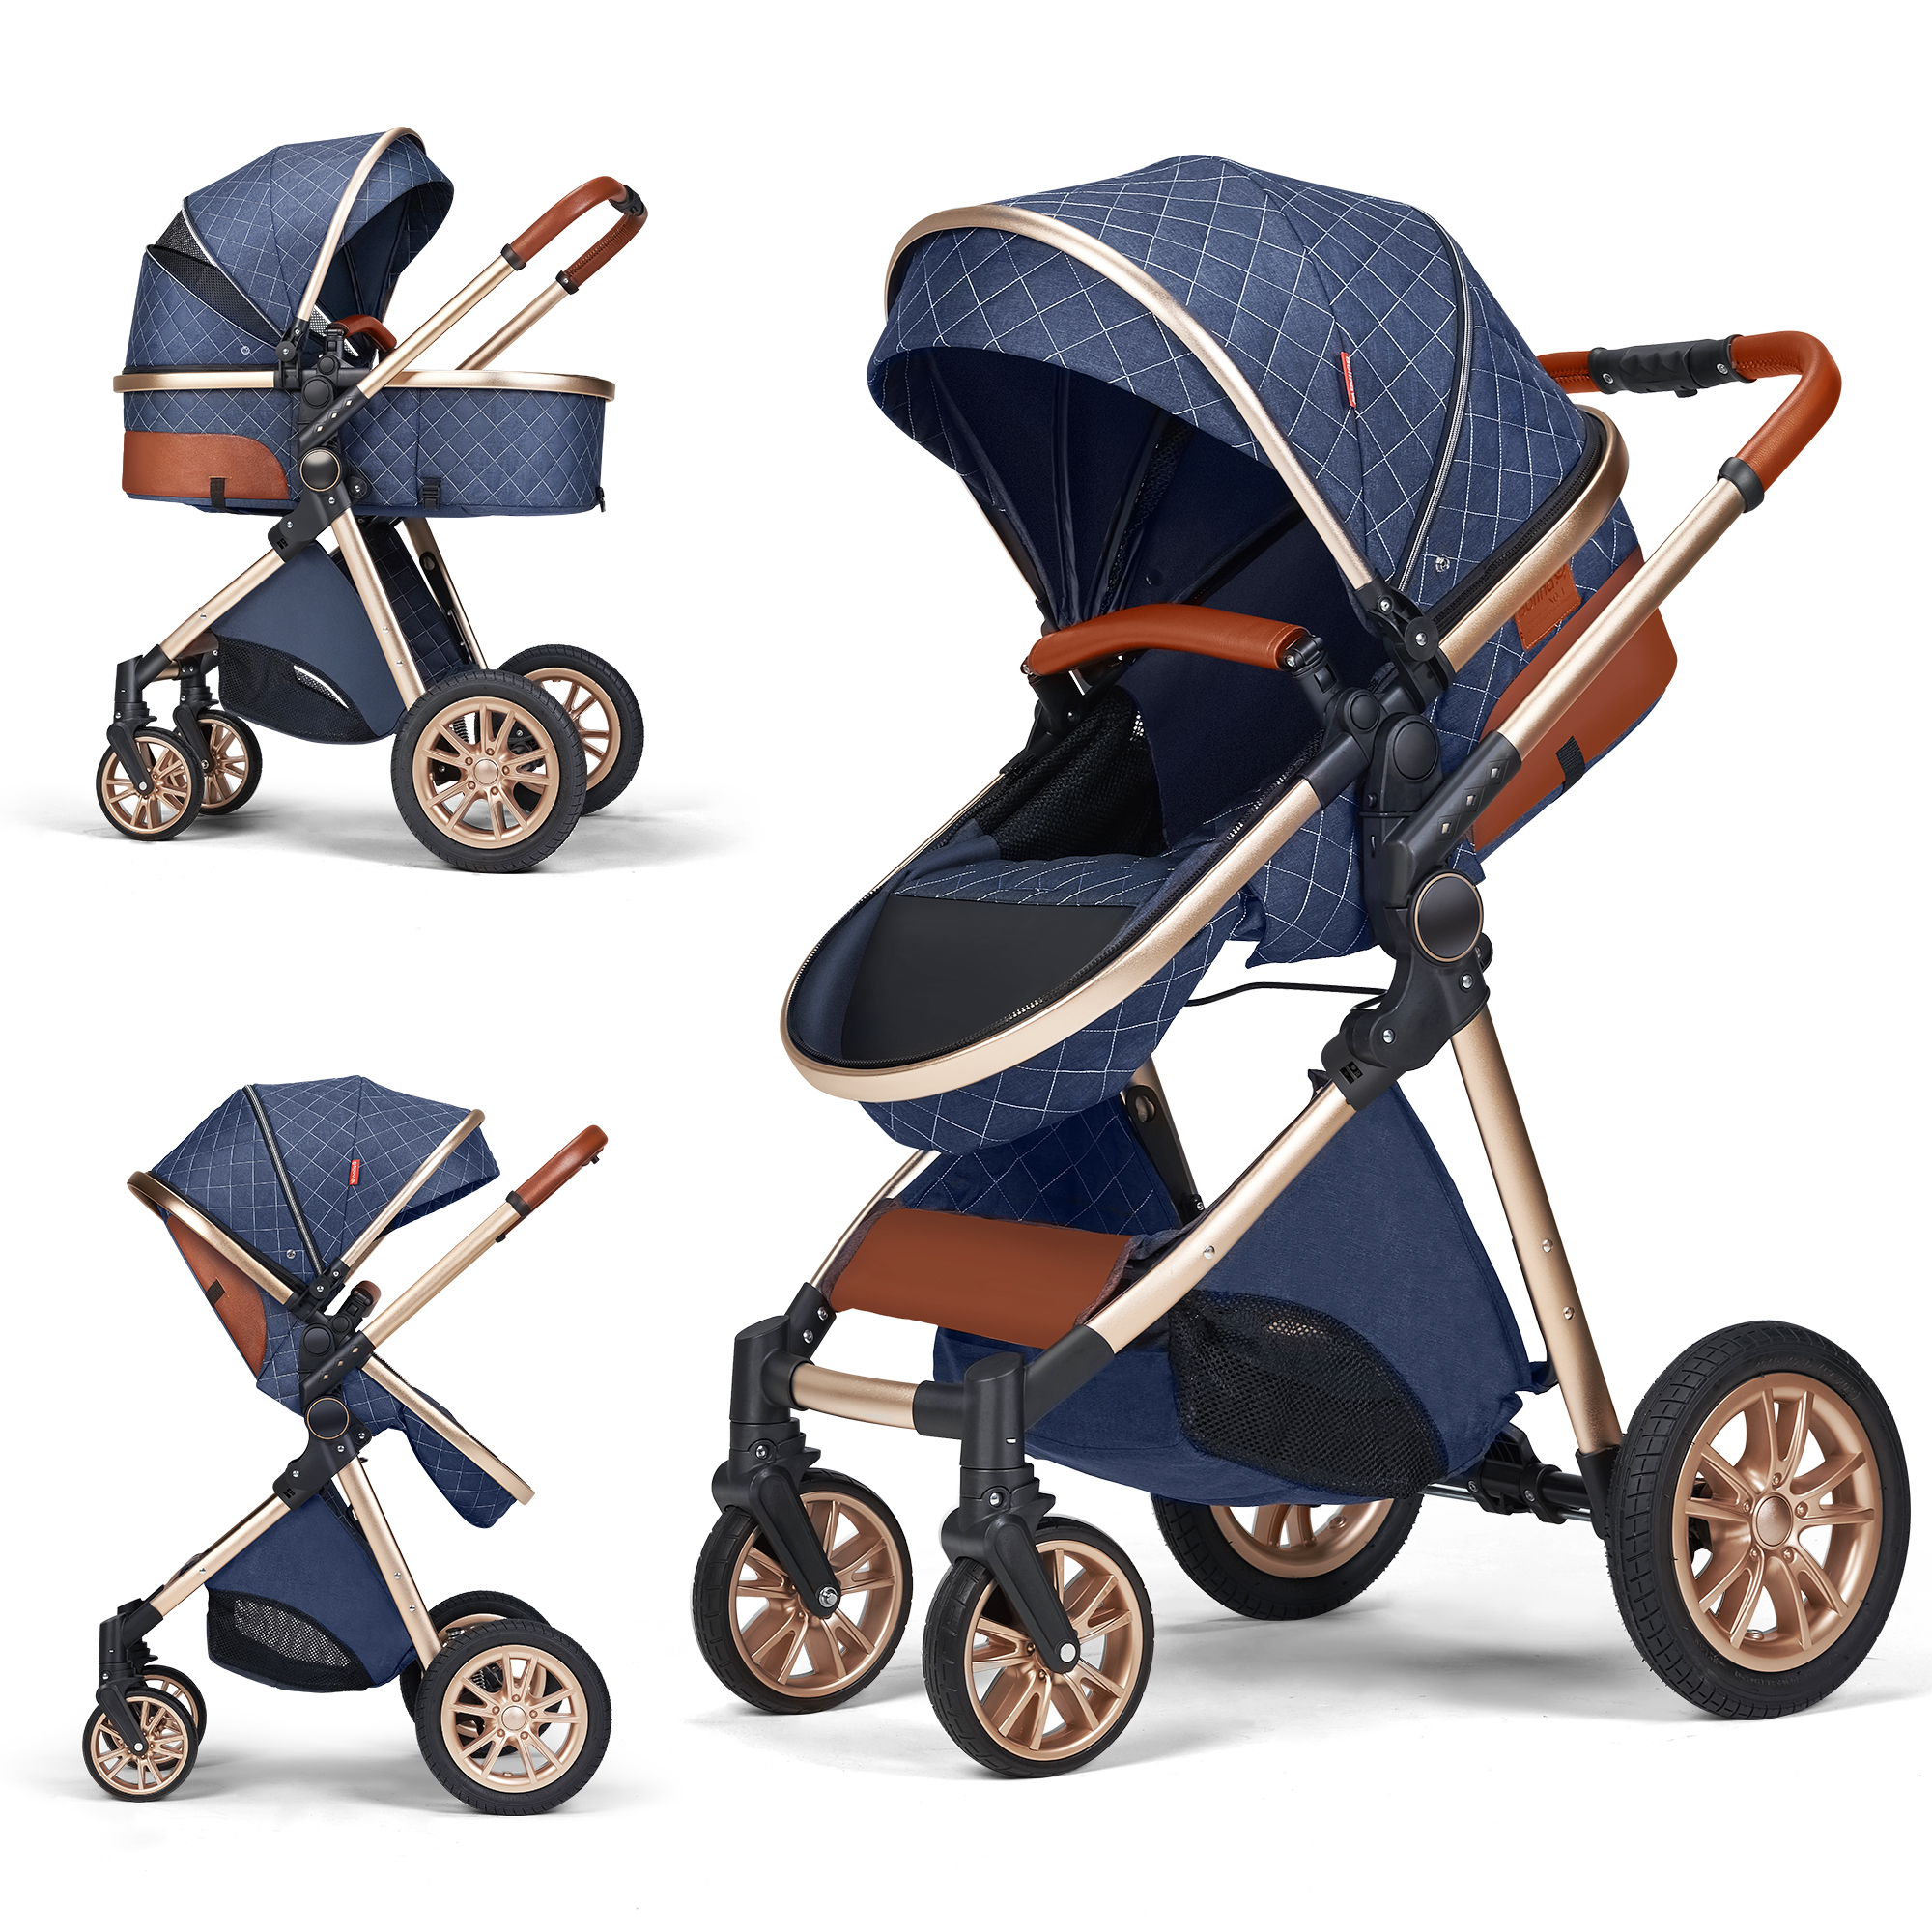 PASSING LOVE High Landscape Infant Baby Stroller Folding Aluminum Kids Carriage Big Sleeping Basket,Blue - image 1 of 13